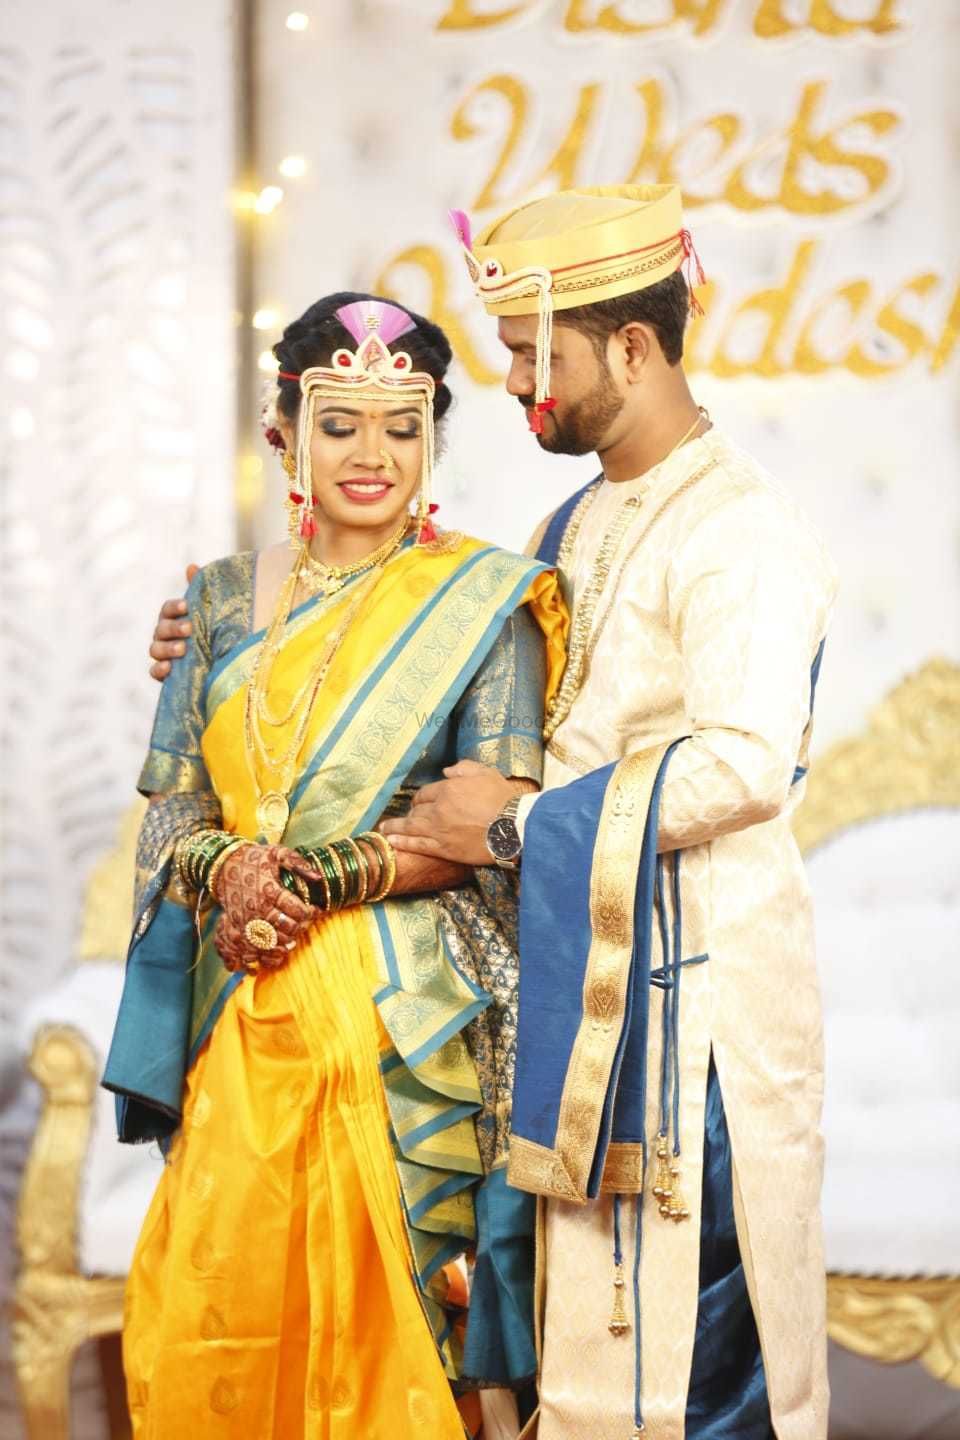 Photo From Disha Maharashtrian Bride - By Kiran.G Pro Makeup Artist